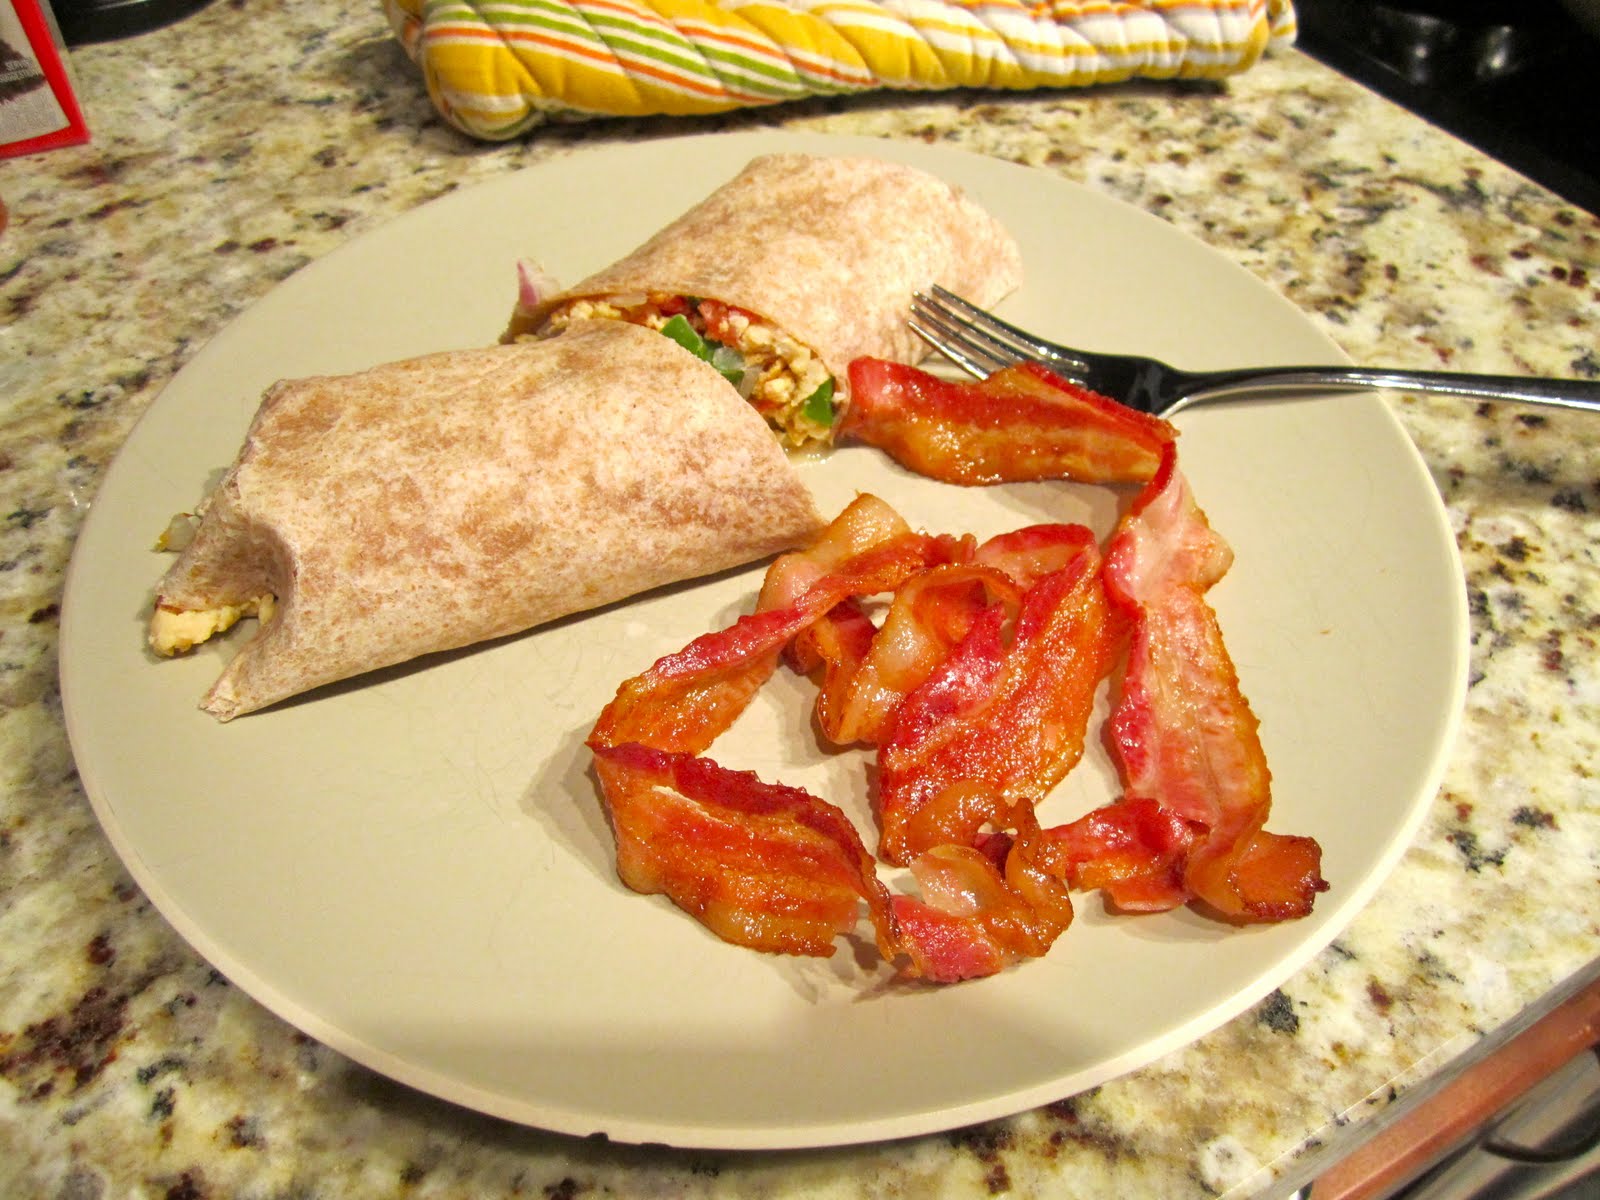 How+to+make+healthy+breakfast+burrito